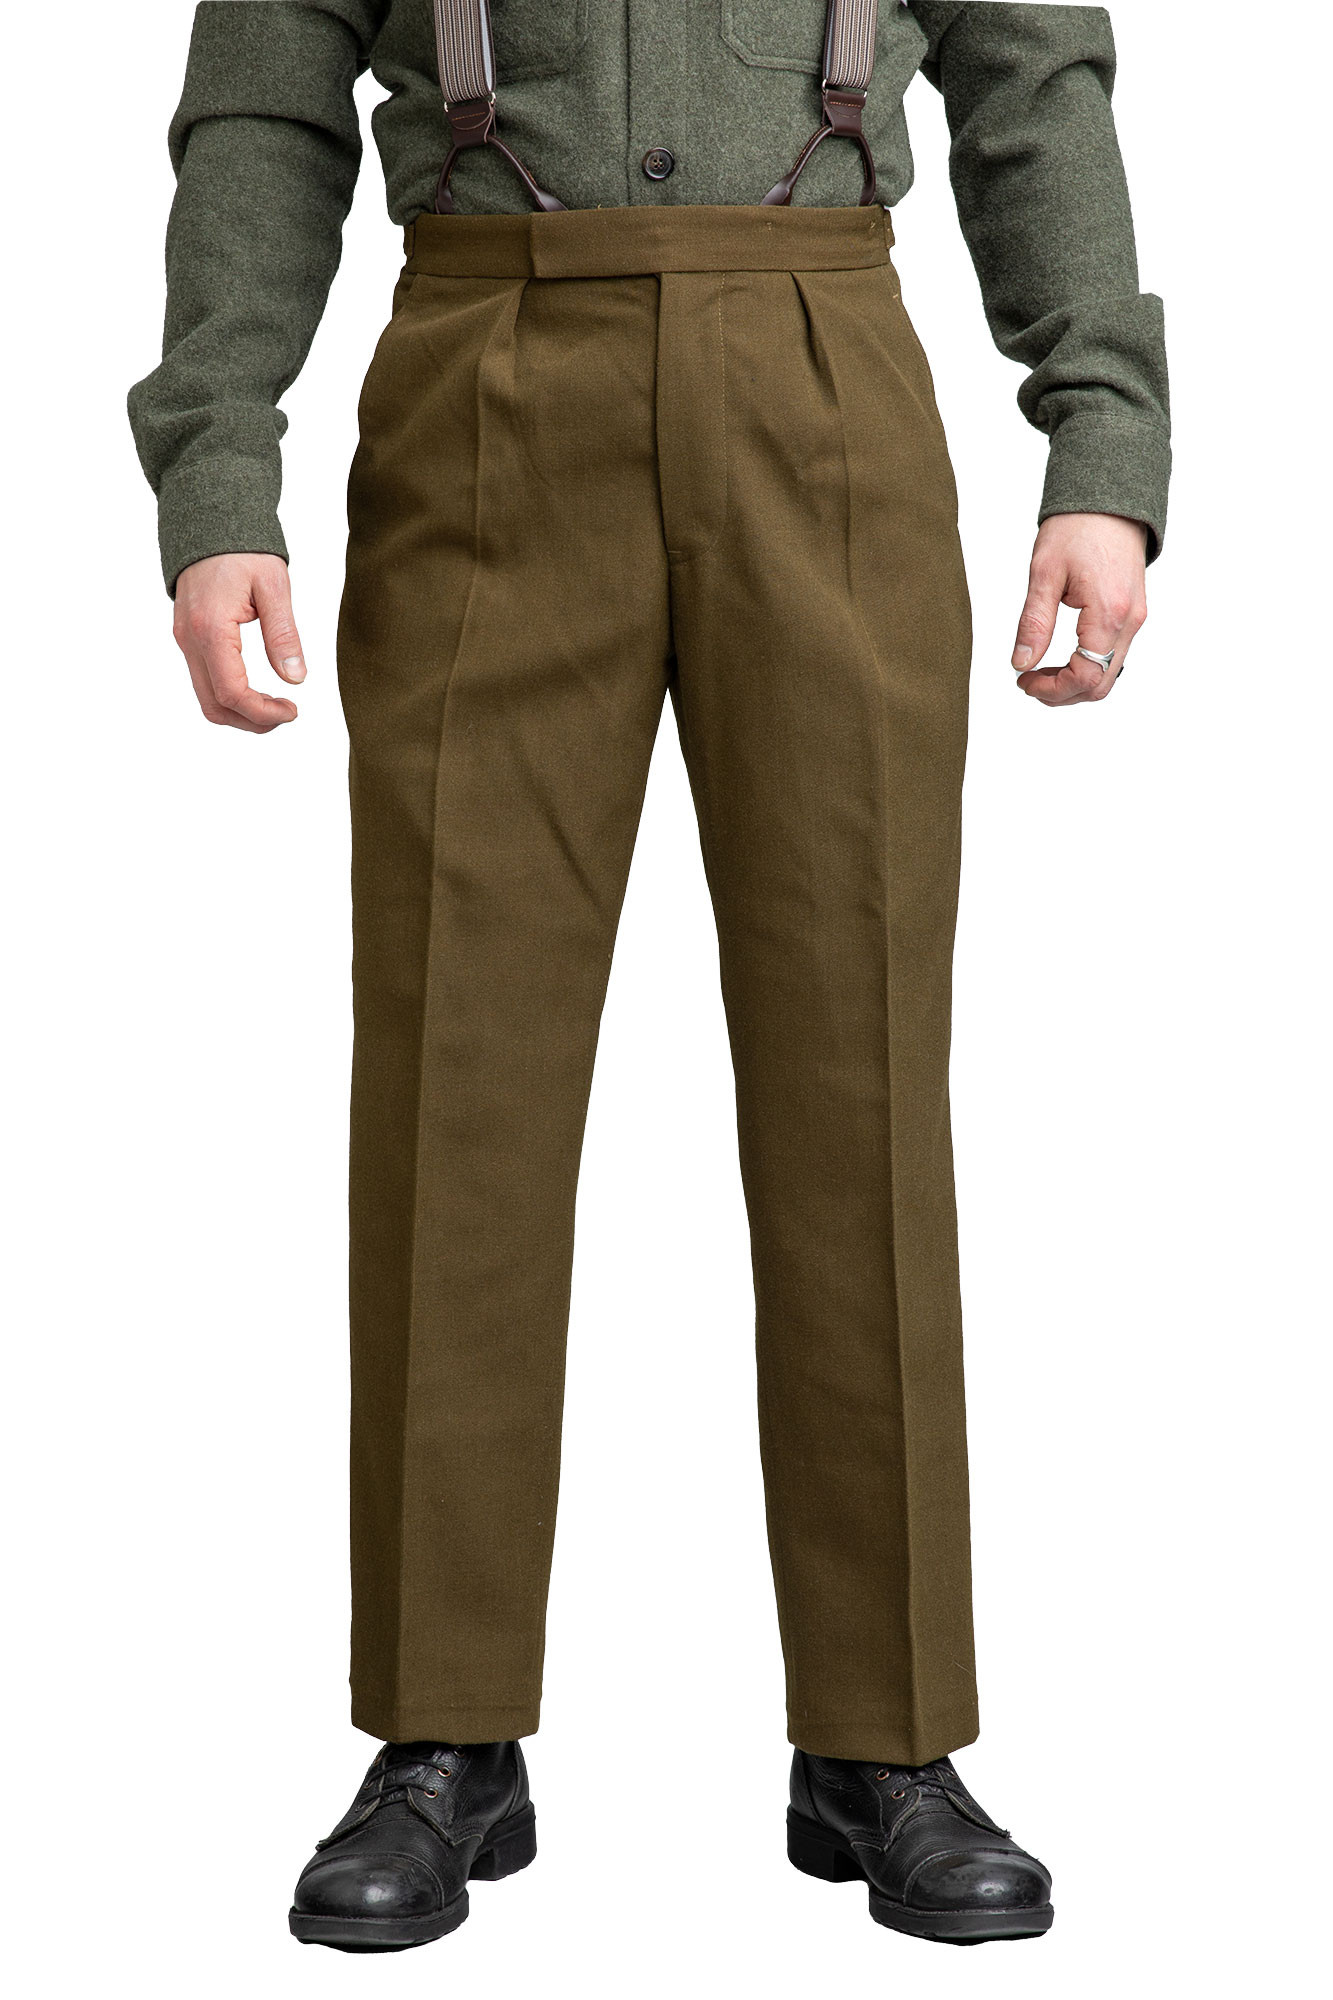 Tightening Pants Without Belt Huge Cheap | thilaptrinh.uit.edu.vn